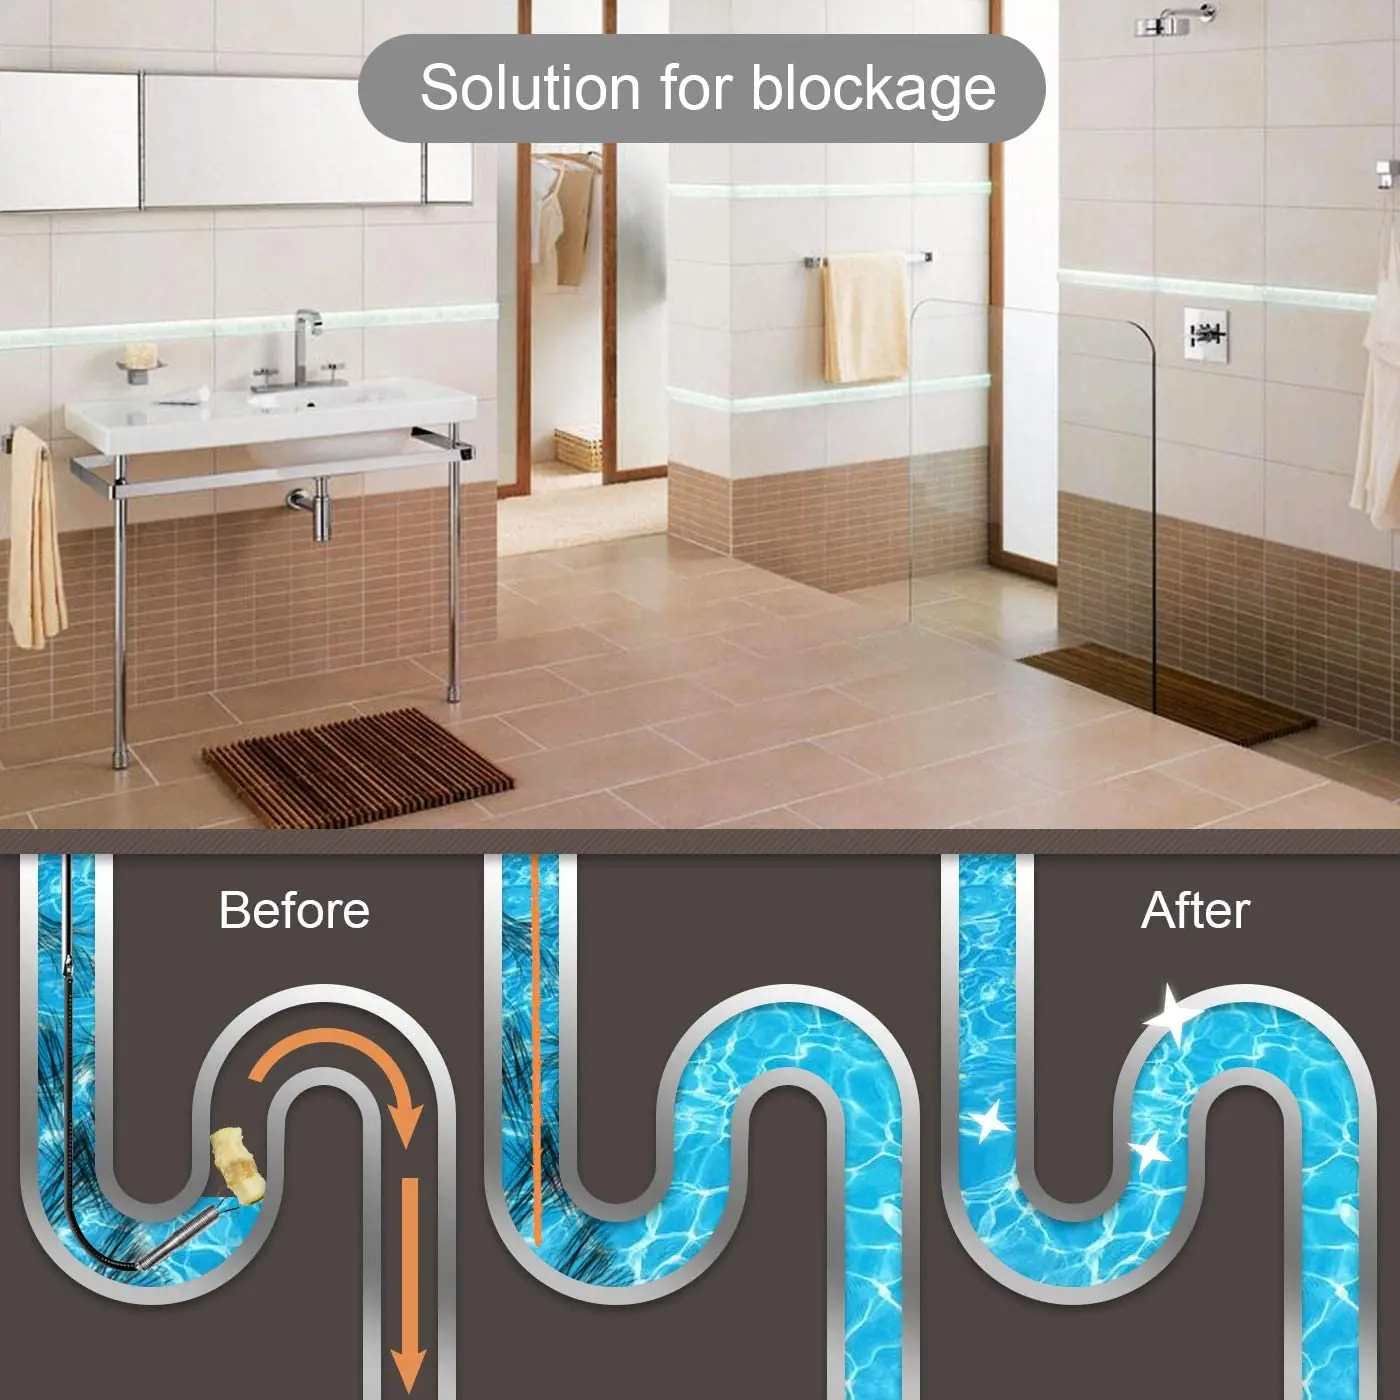 https://ae01.alicdn.com/kf/He20b73bed25d42238f4d415194b7436en/6pcs-Set-Drain-Clog-Remover-Plumbing-Tool-For-Bathroom-Shower-Bathtub-Drain-Cleaner-Sink-Unclogger-Hair.jpg